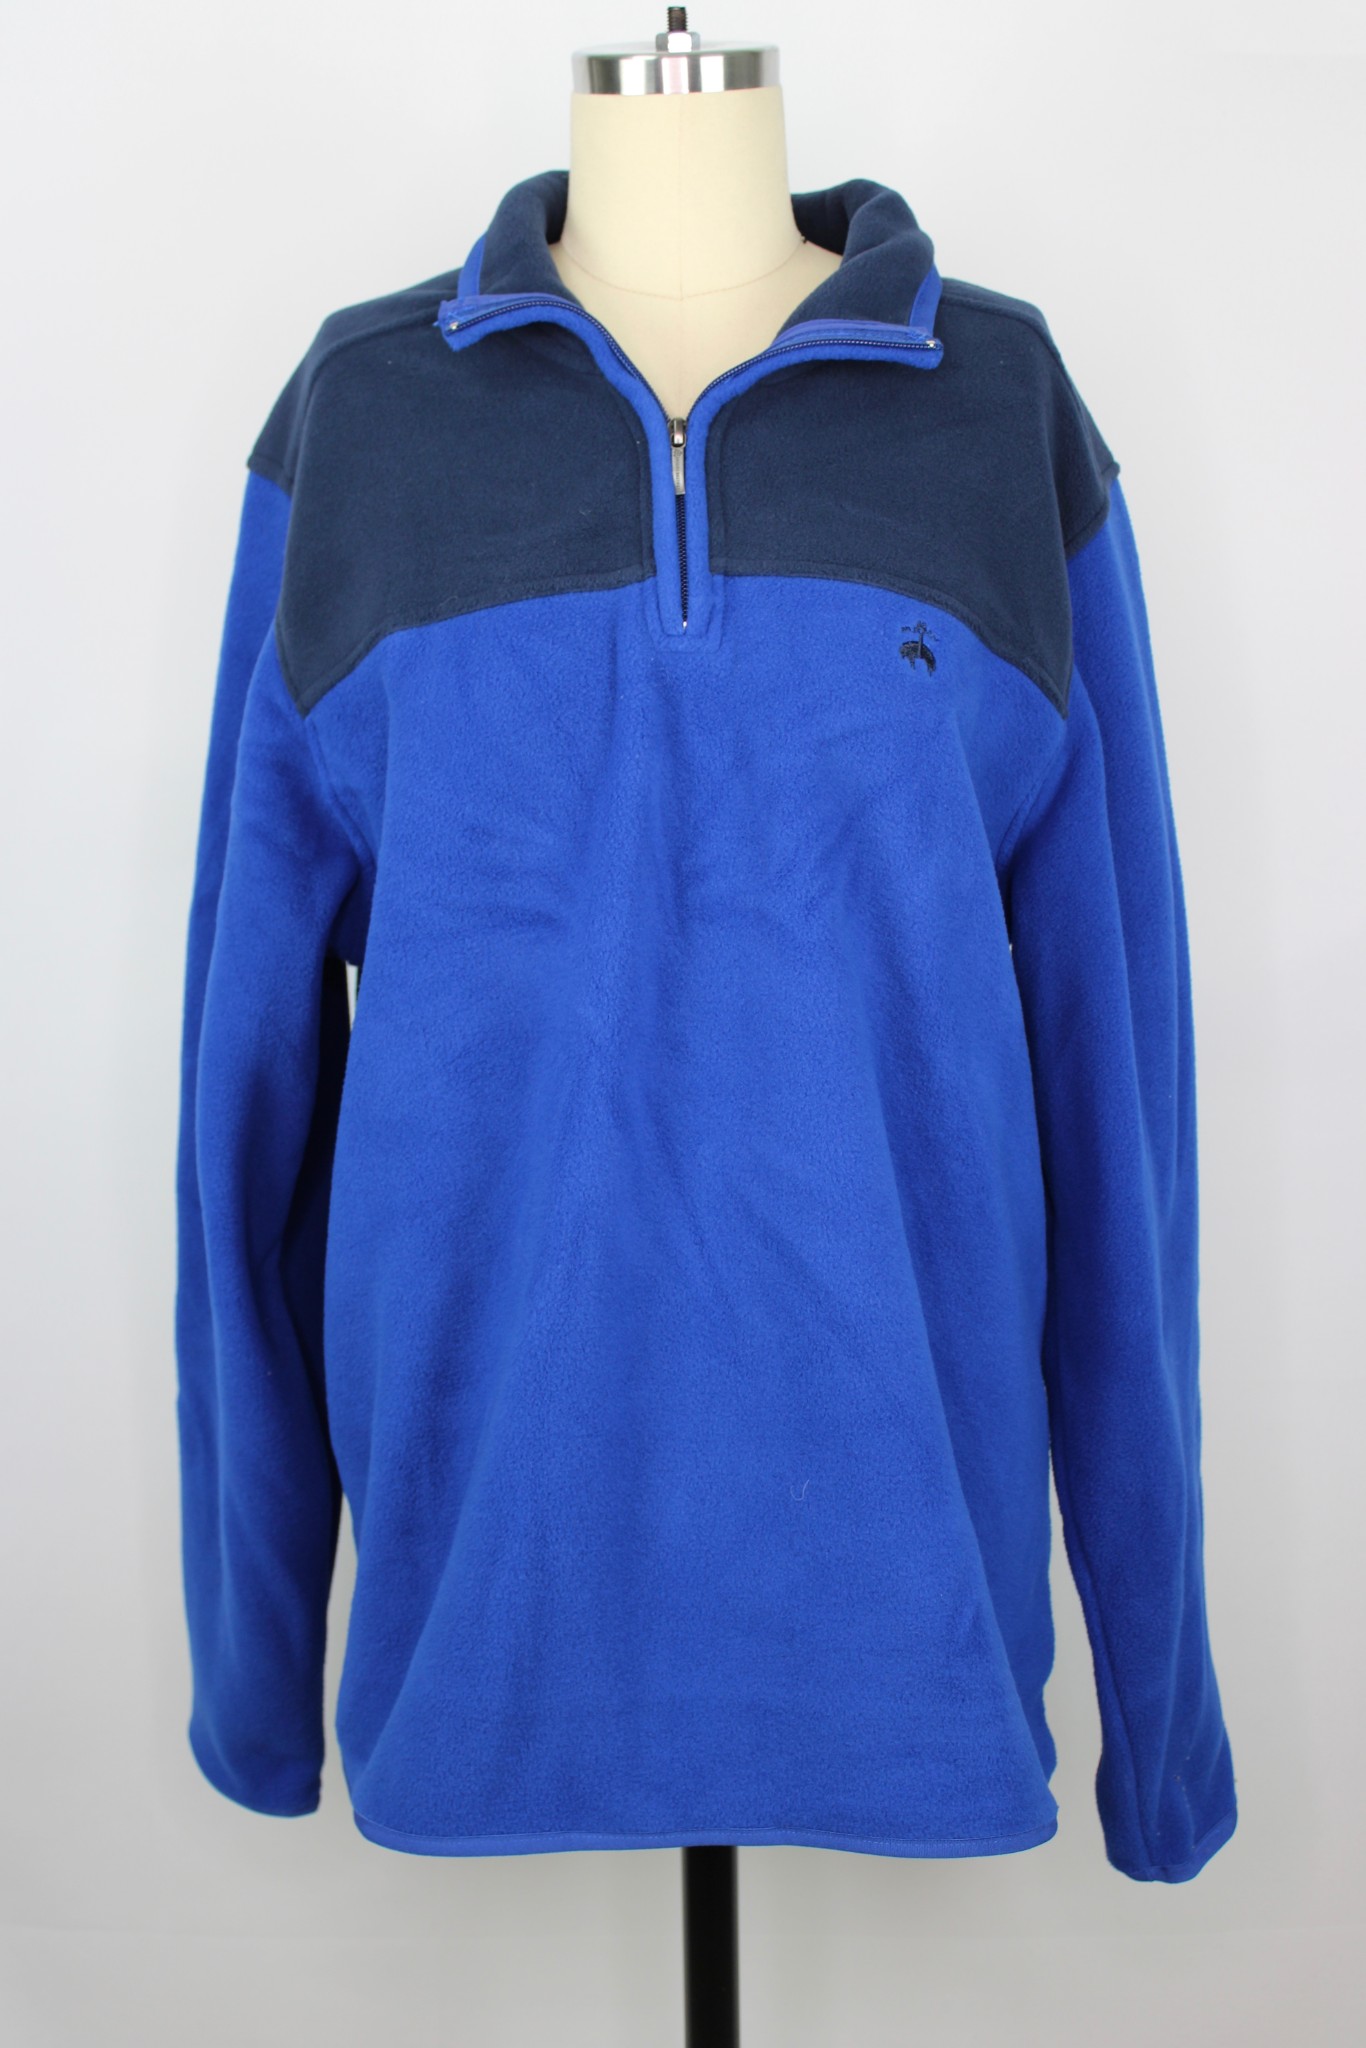 Brooks Brothers Mens Polar Fleece 1/2-Zip Pullover sz M in Blue NWT $79 ...